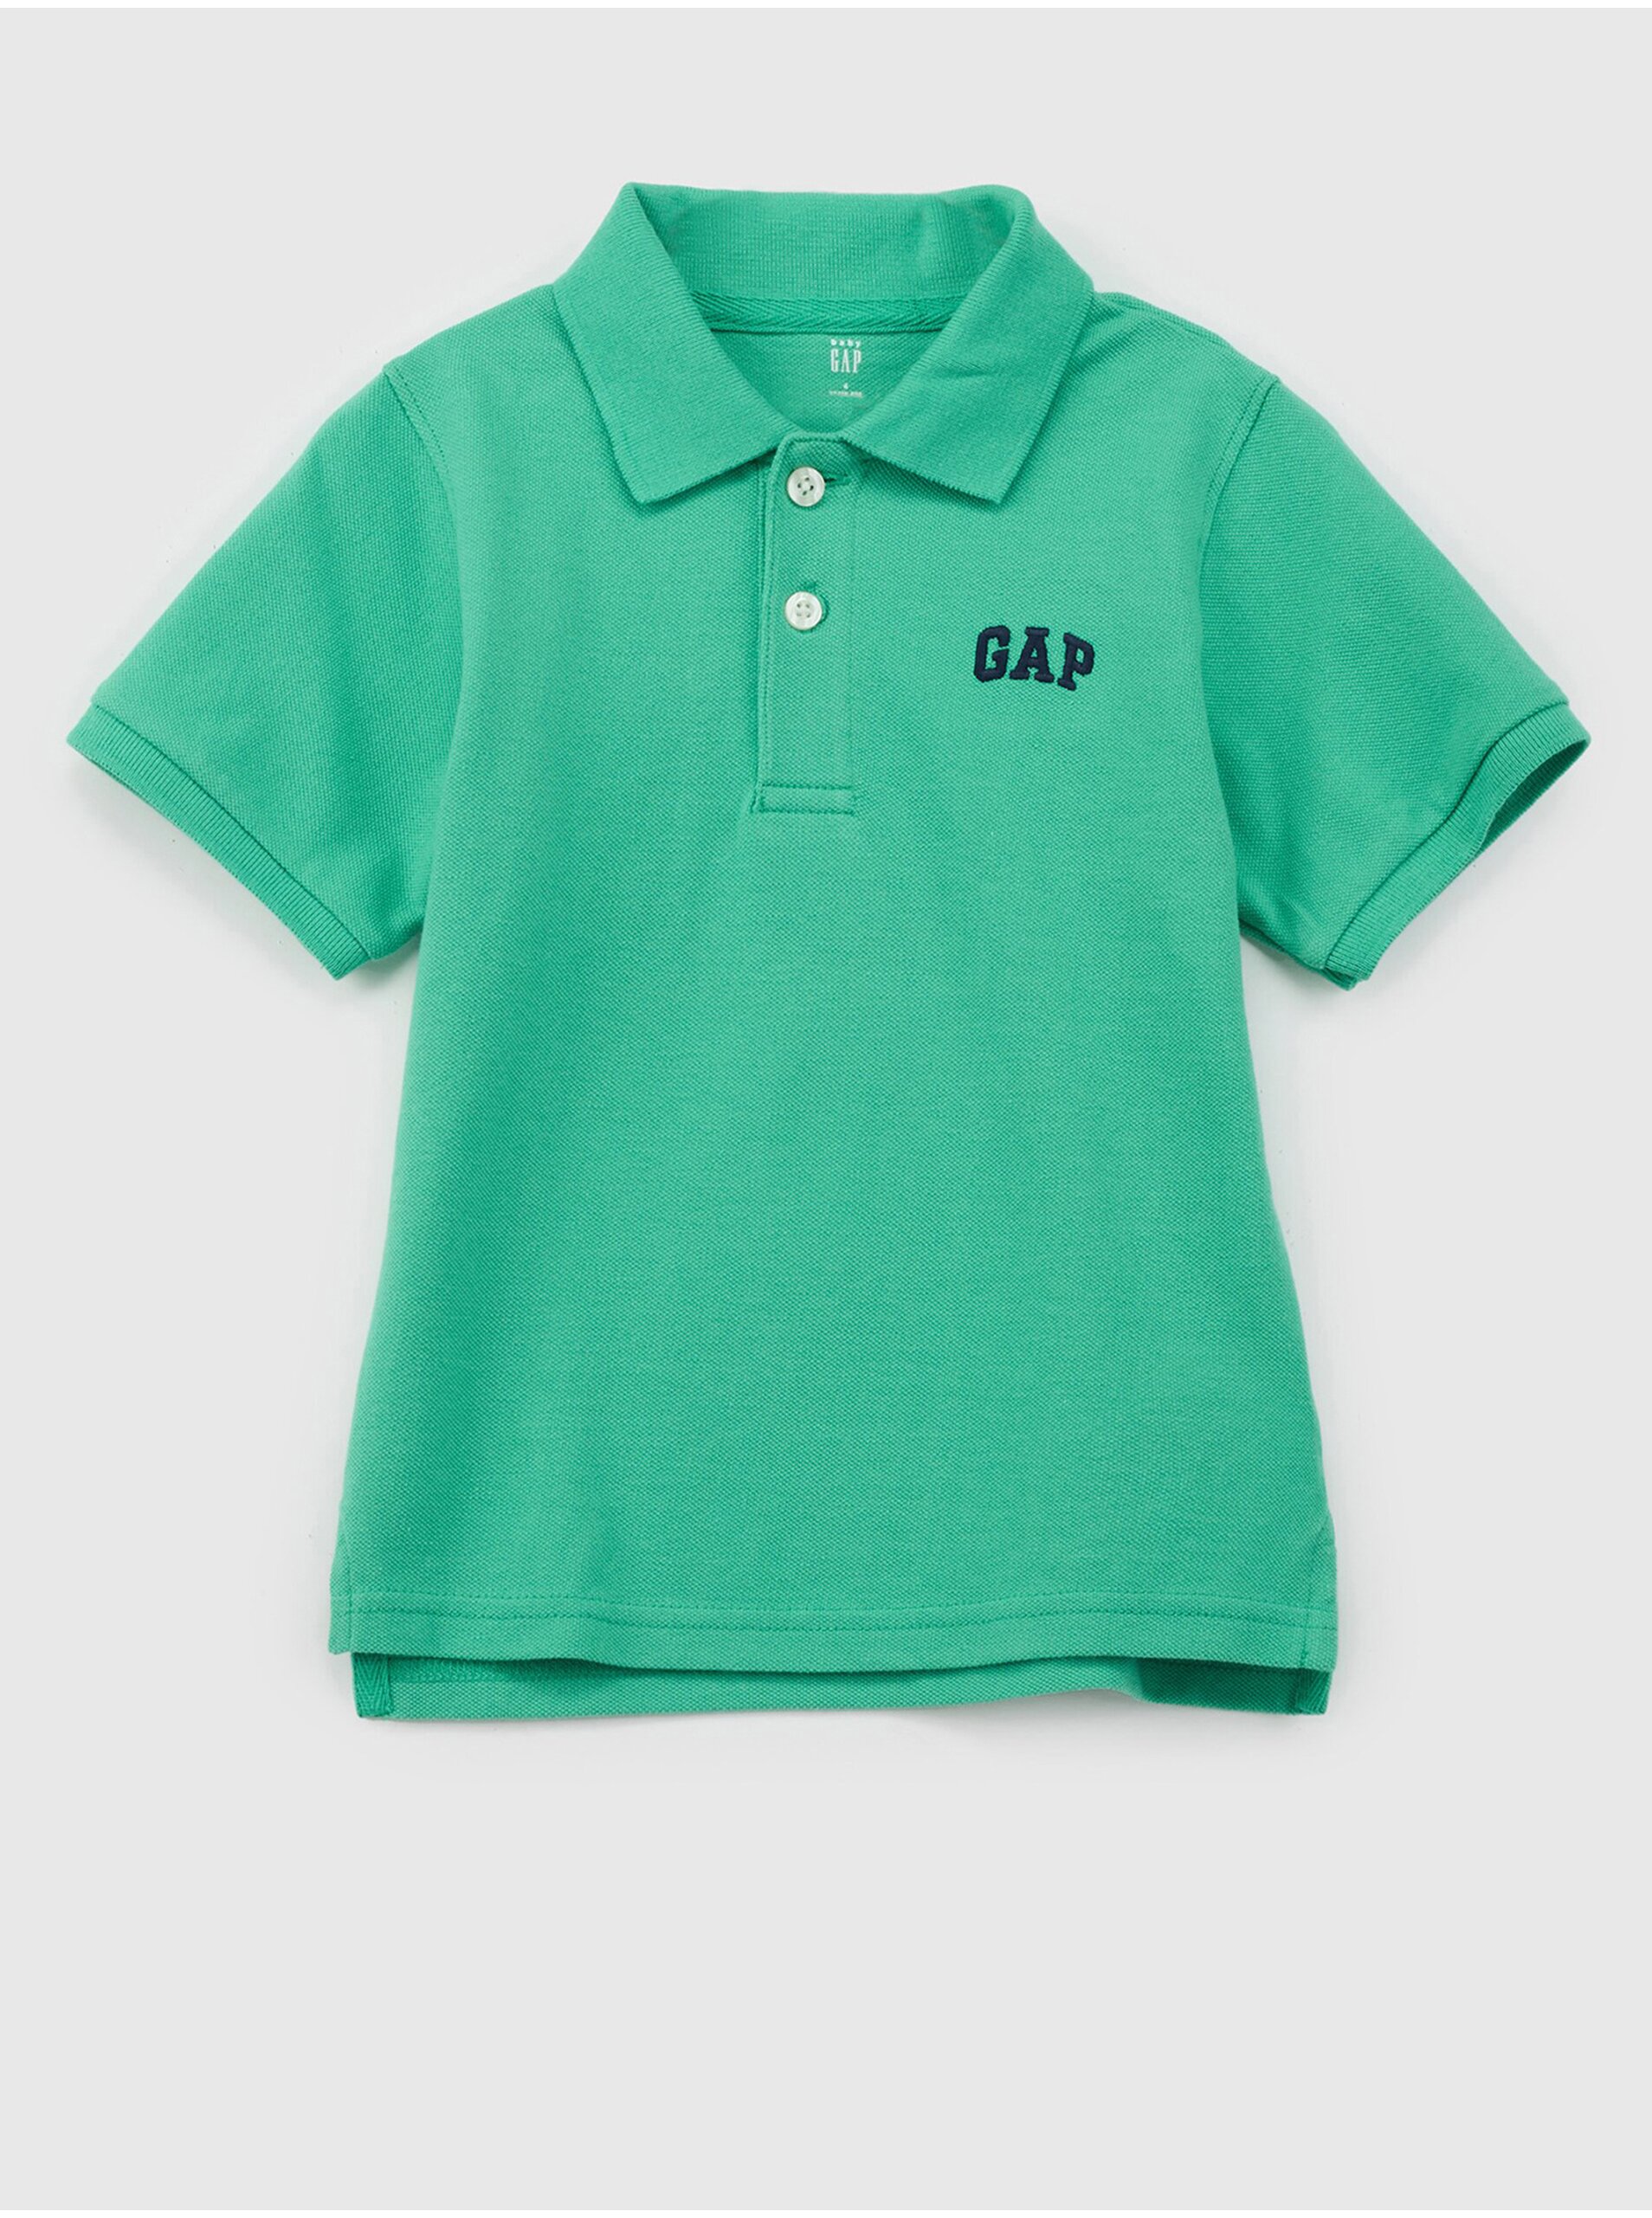 E-shop Zelené klučičí polo tričko s logem GAP